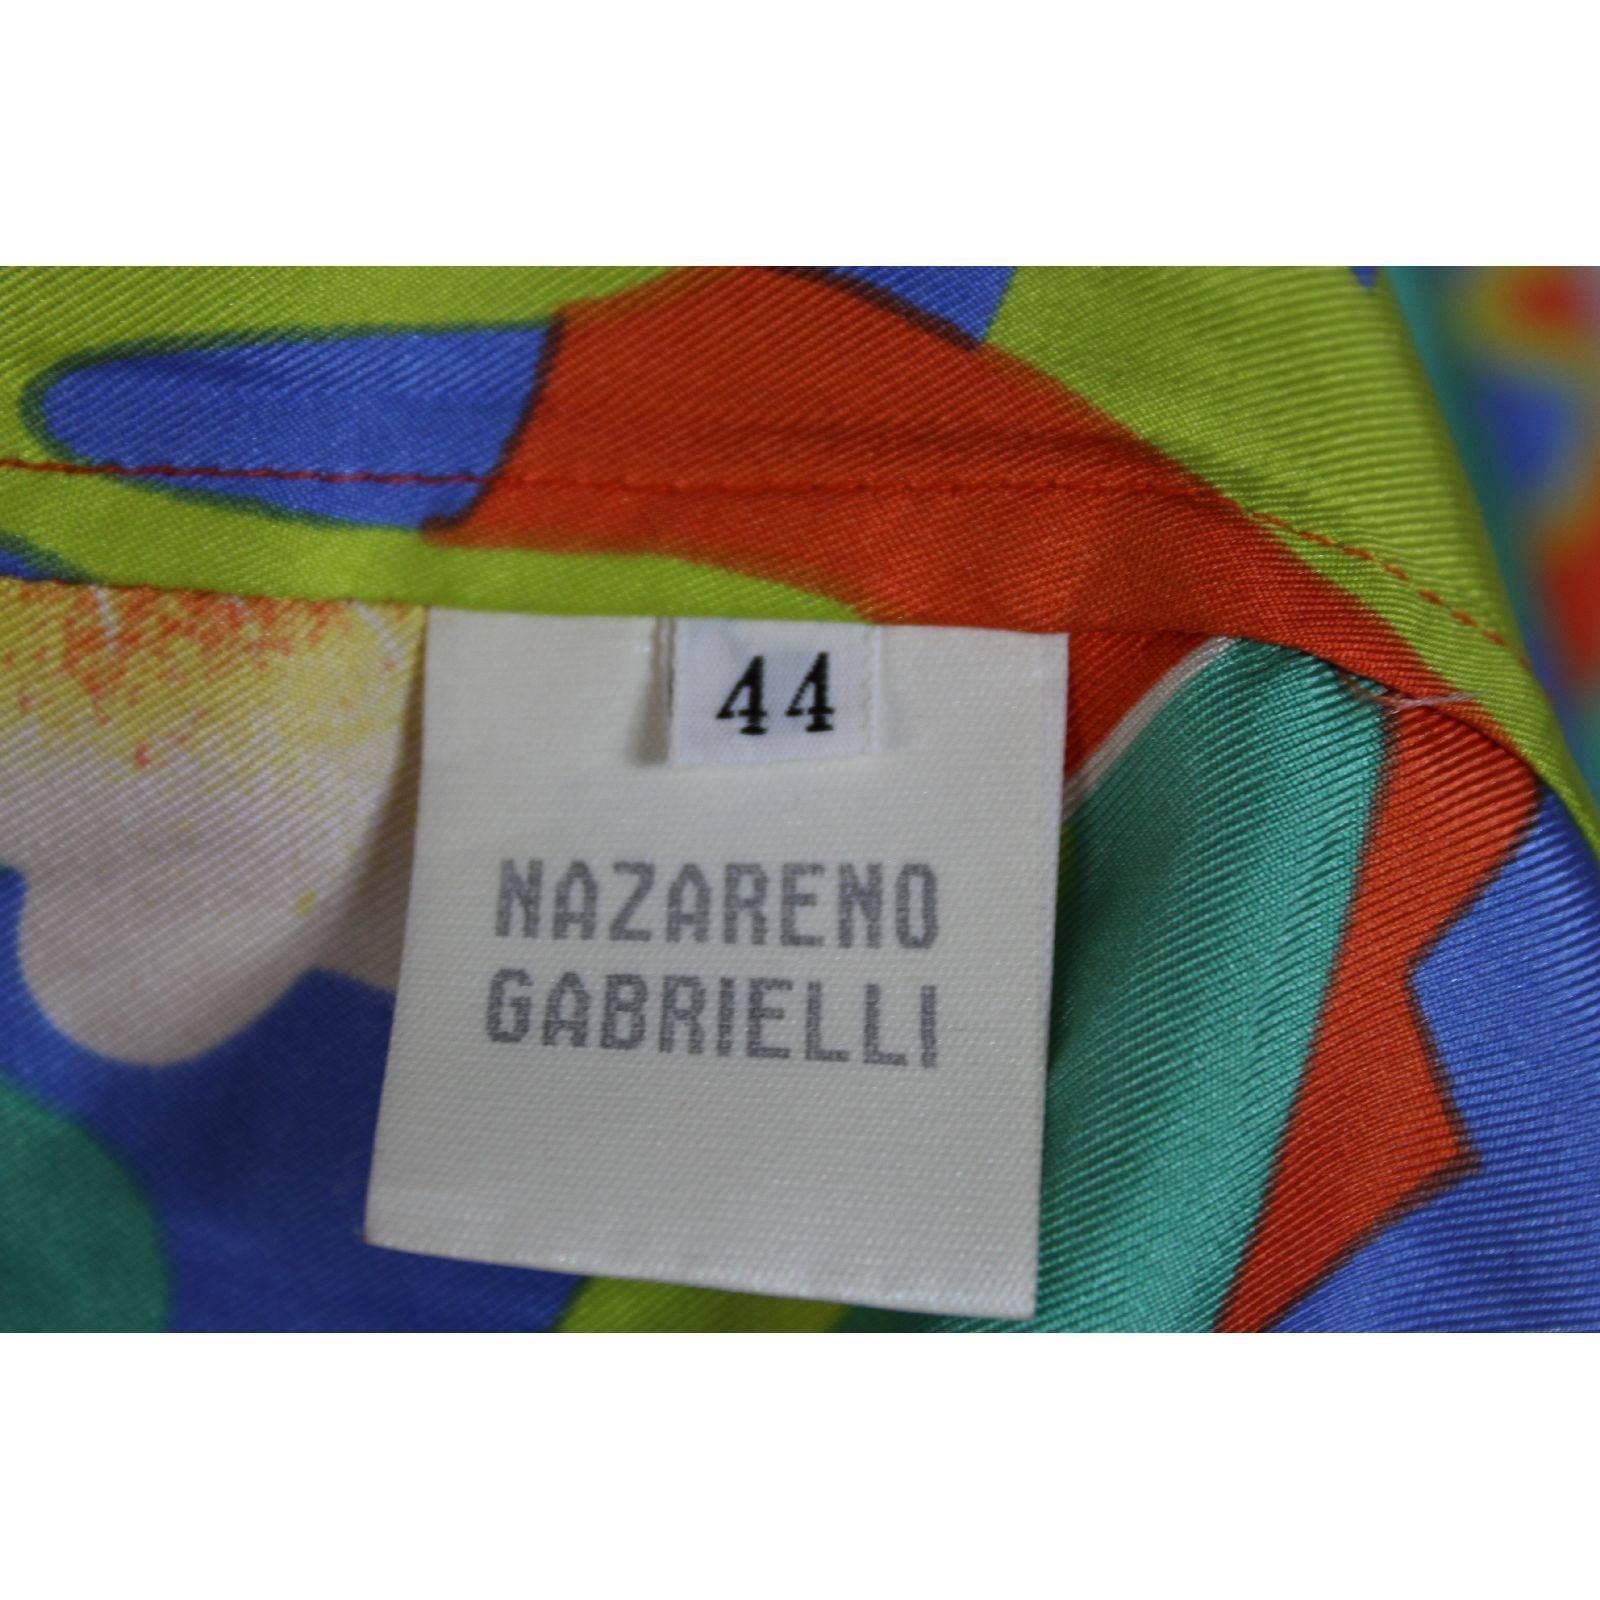 Women's Nazareno Gabrielli floral orange silk blouse shirt size 44 women's 1980s vintage